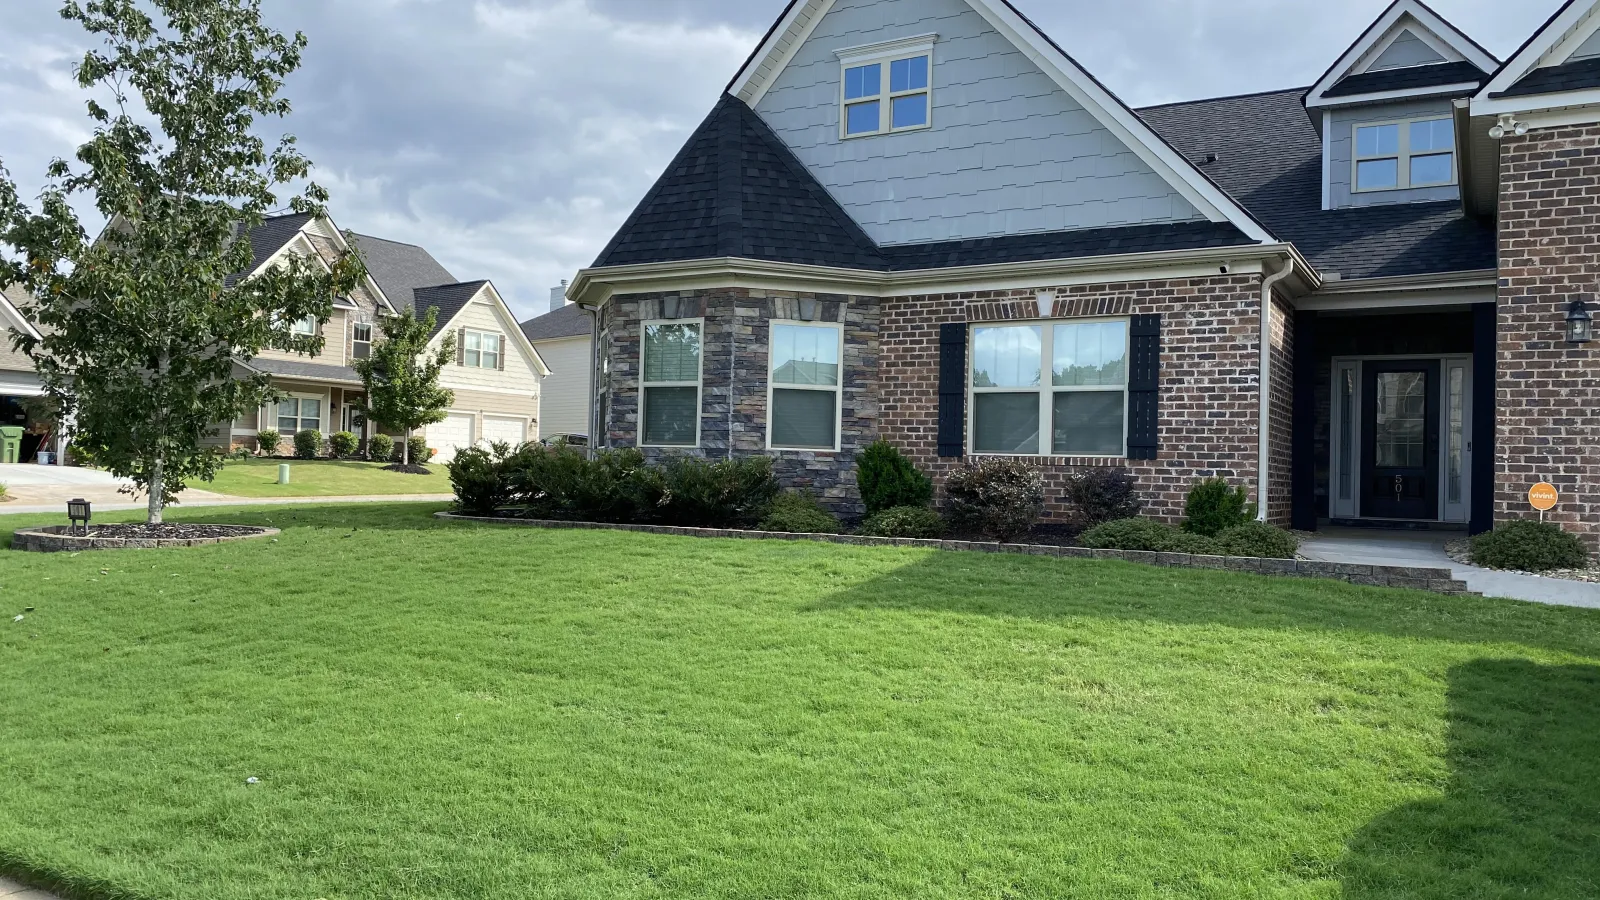 Pretty home and green grass